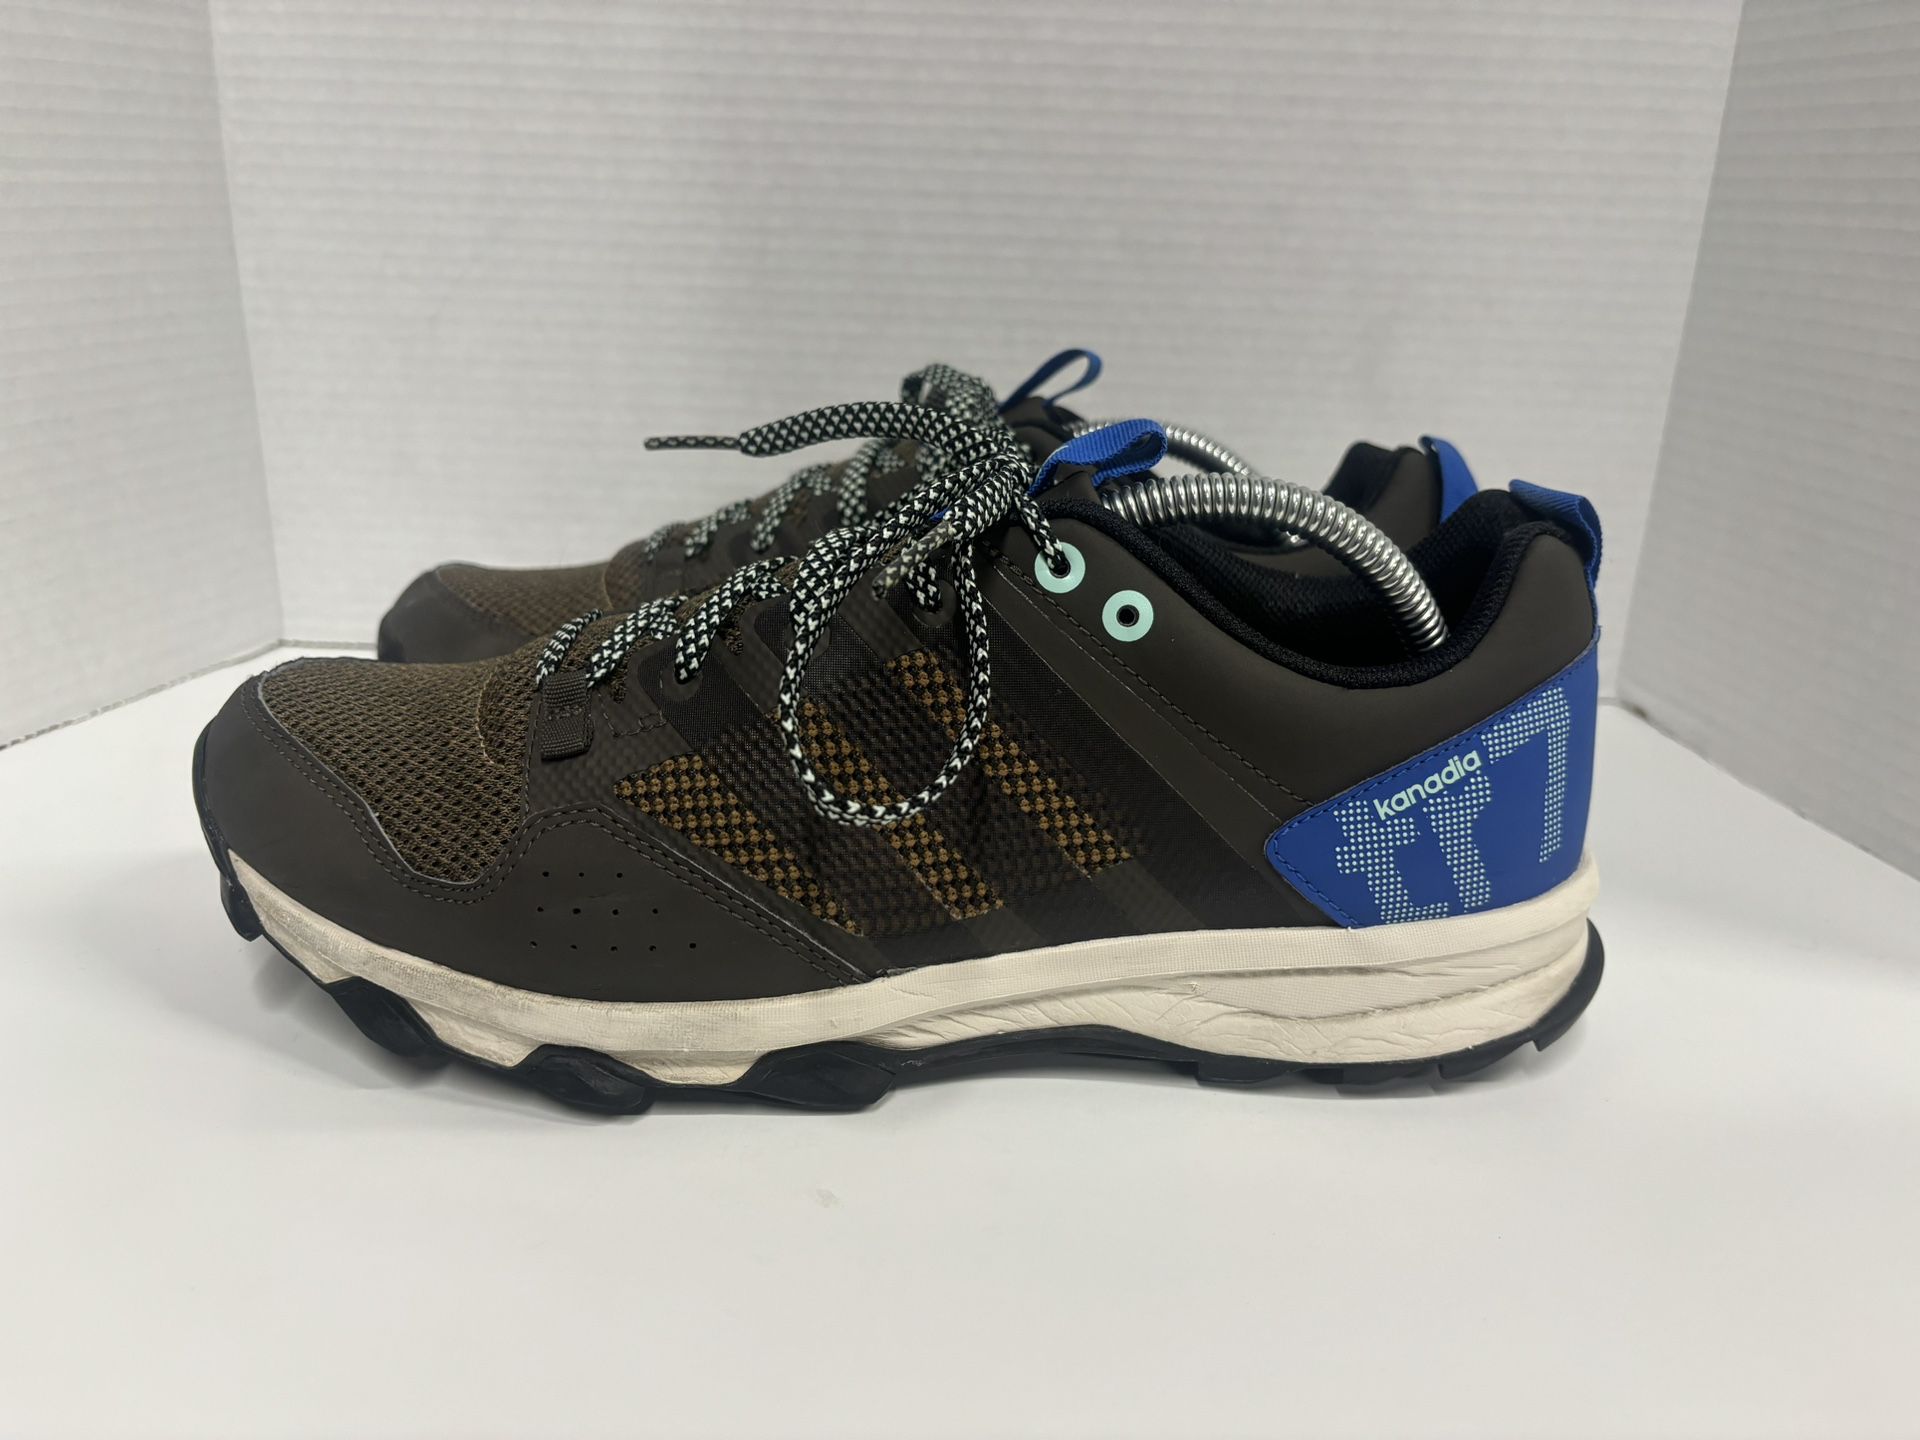 Adidas Kanadia TR 7 trail running/hiking shoes B33628 Brown Blue Men’s size 9.5